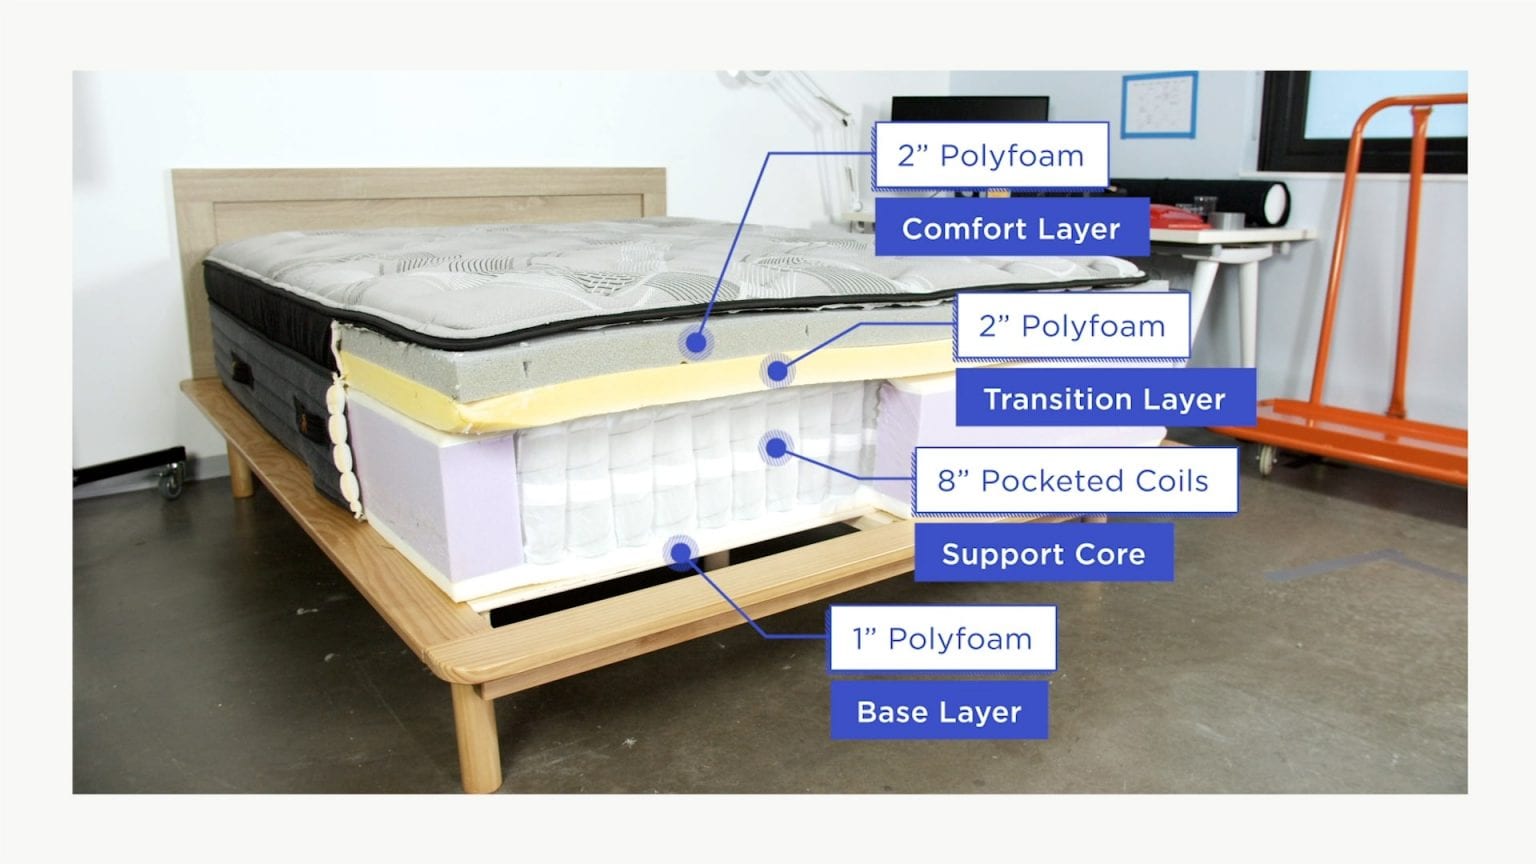 Core sleep mattress